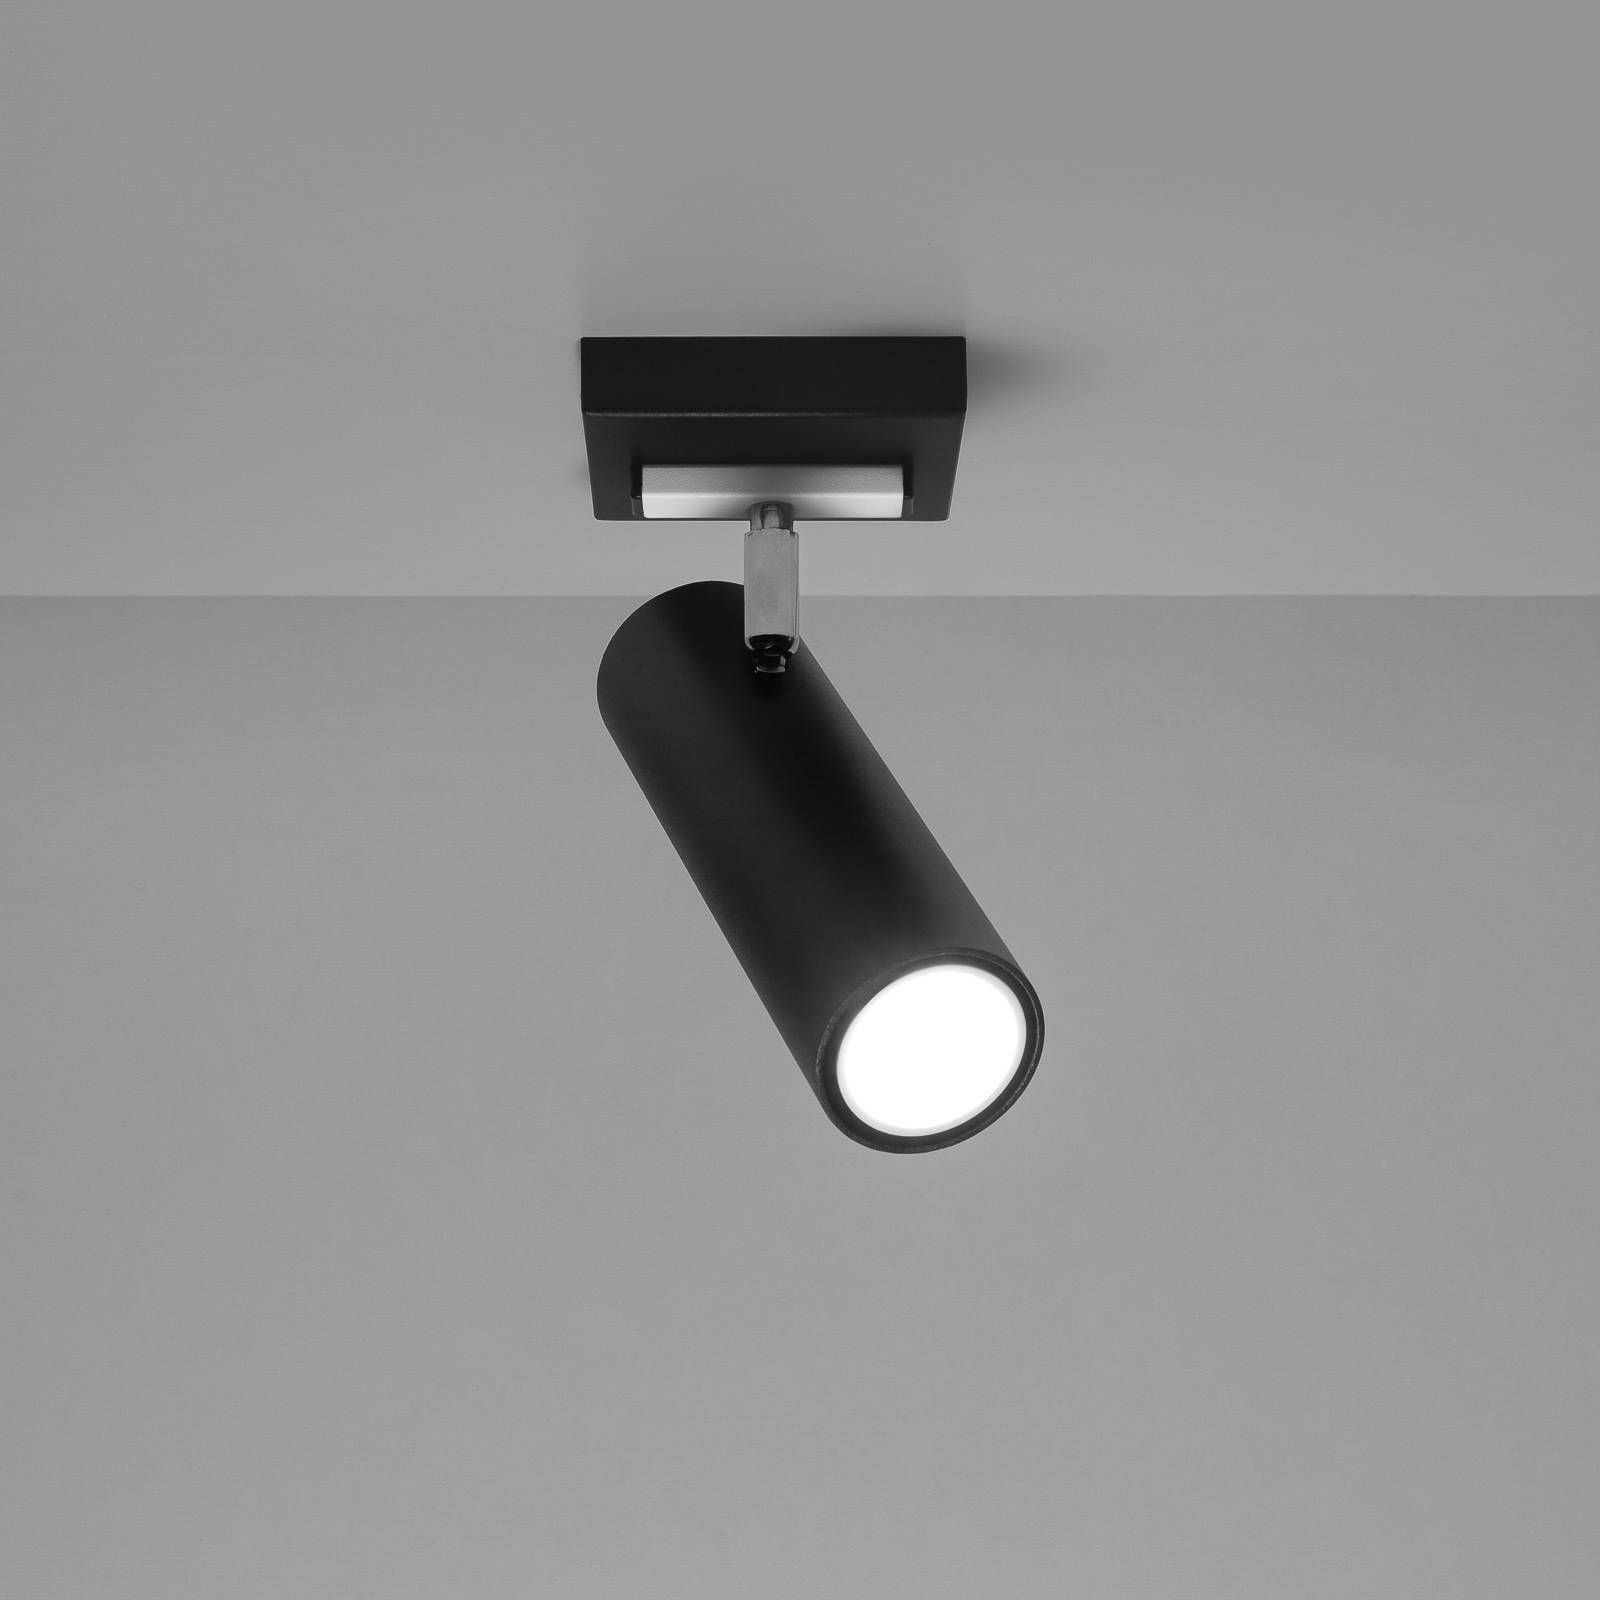 Euluna Stropné svietidlo Spoty, čierne, jedno-plameňové, Obývacia izba / jedáleň, oceľ, GU10, 40W, P: 18 cm, L: 18 cm, K: 20cm